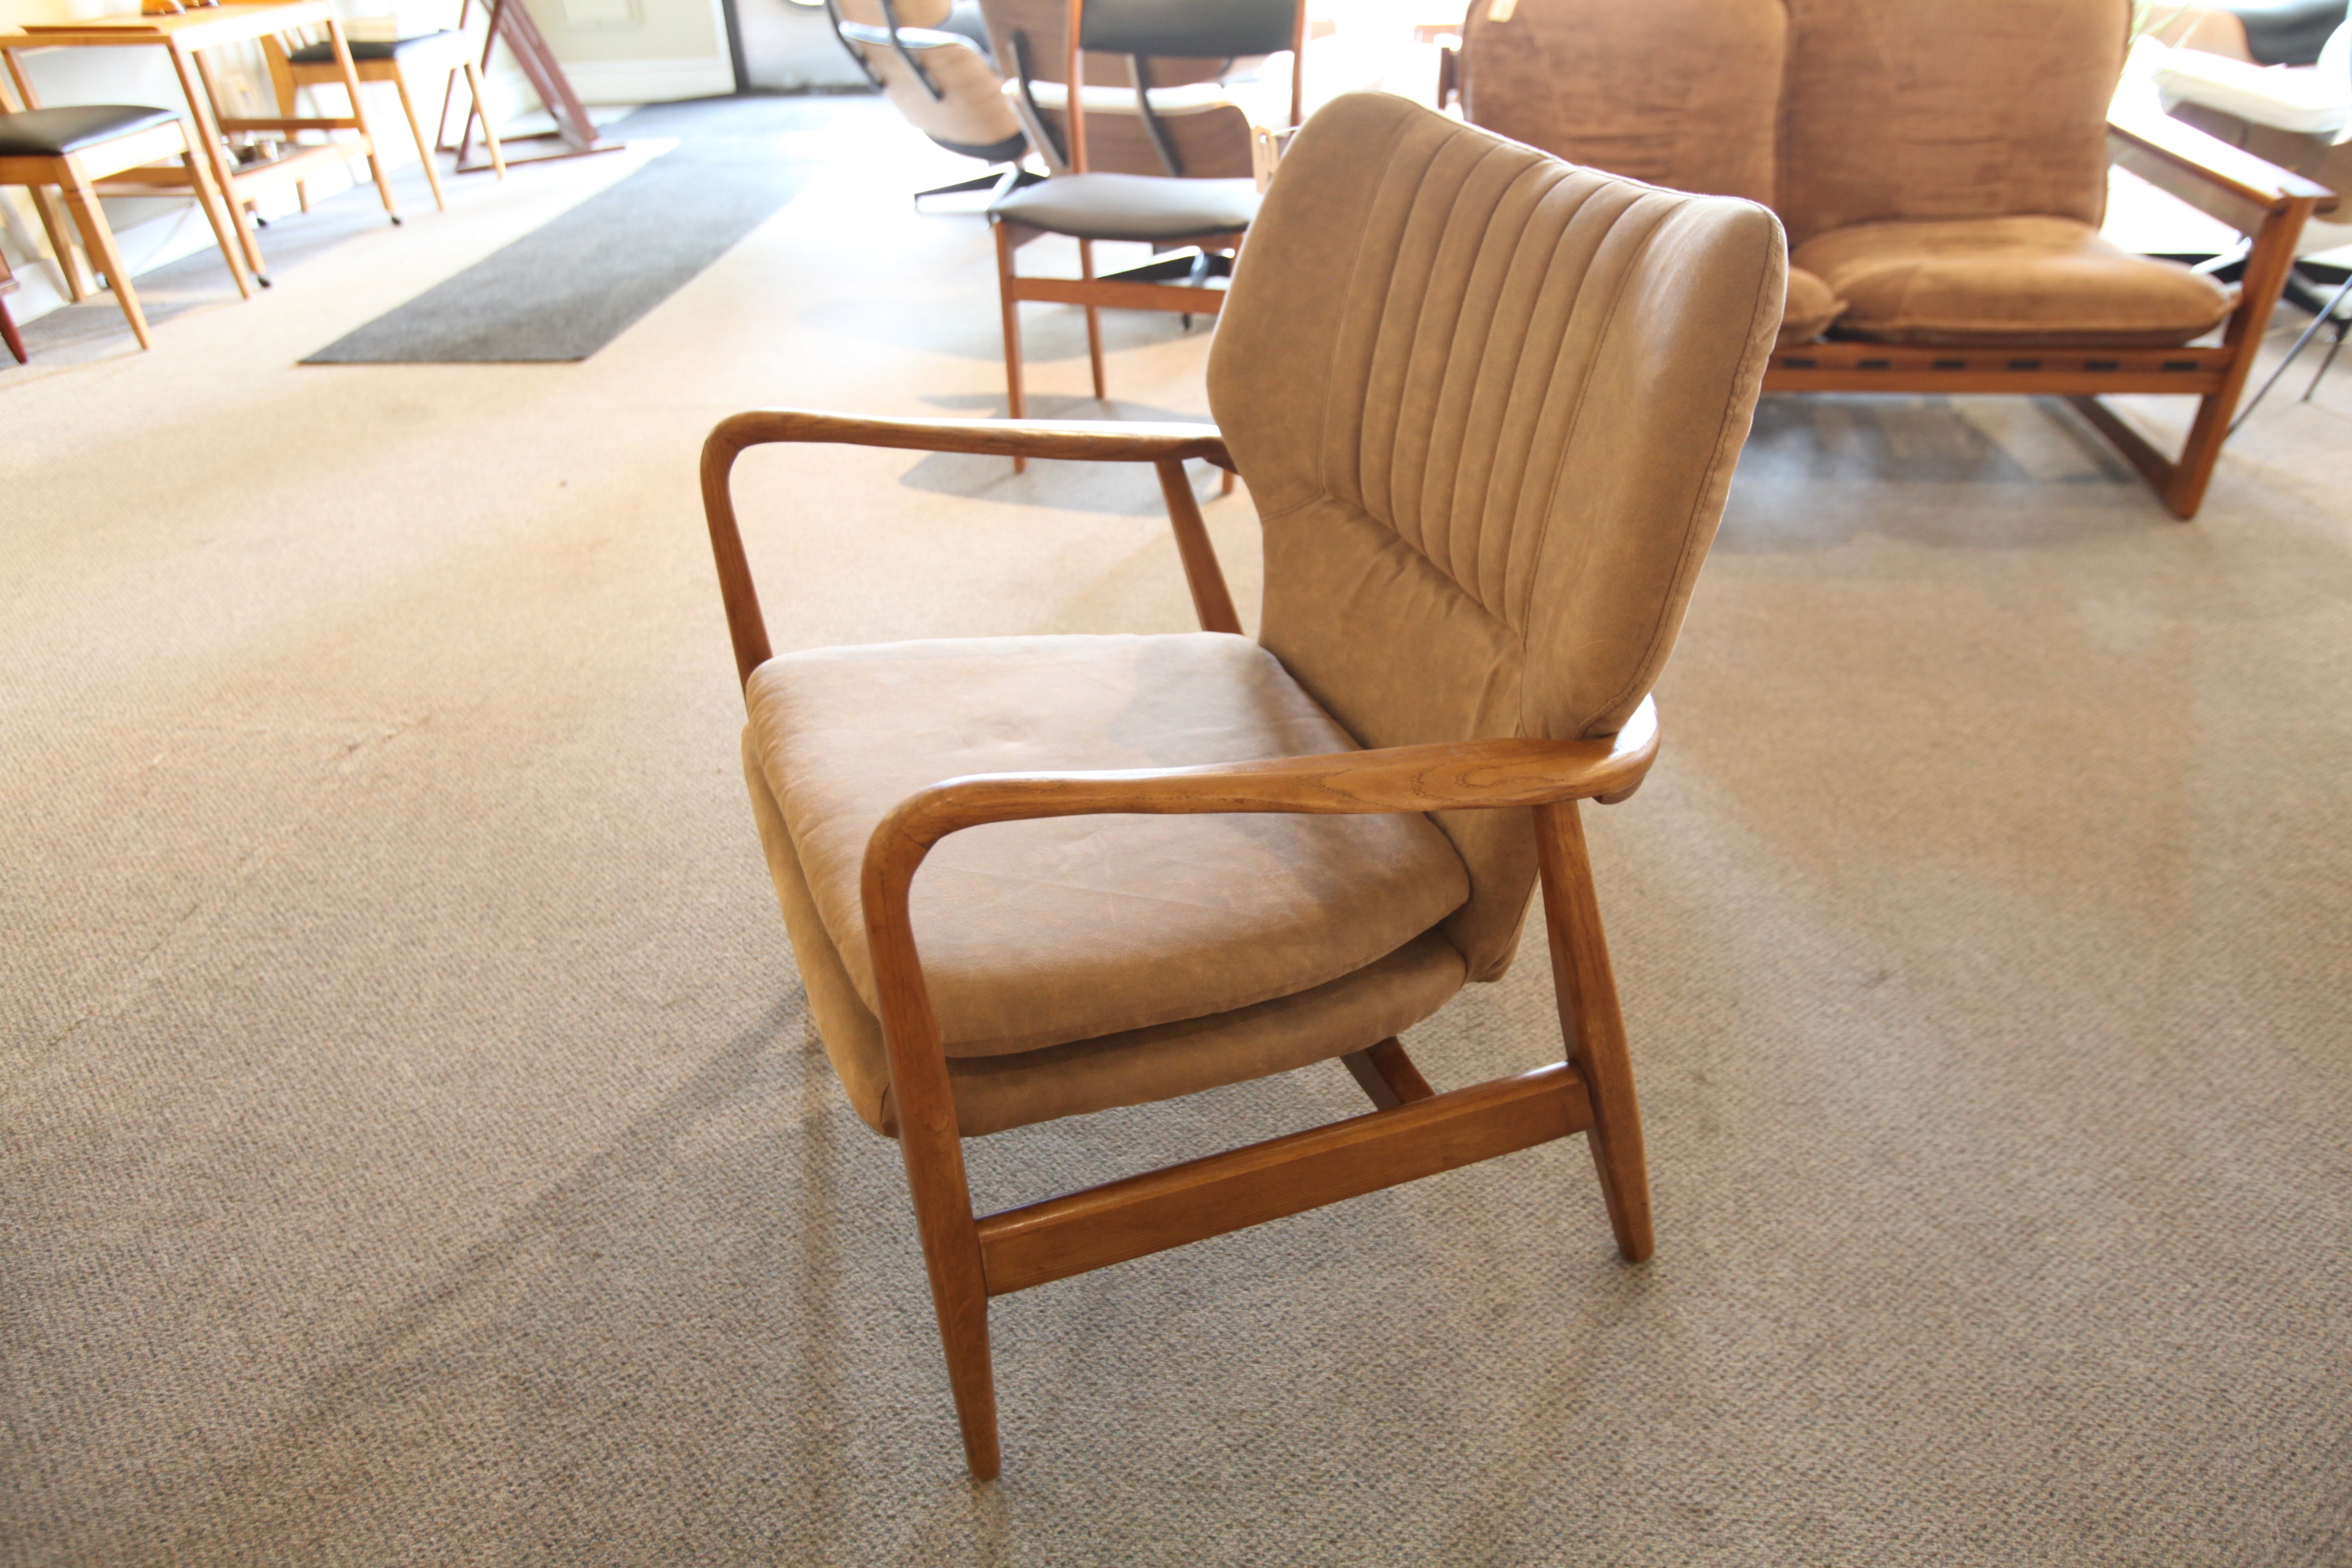 Replica Wood Lounge Chair (28"W x 25"D x 33"H)